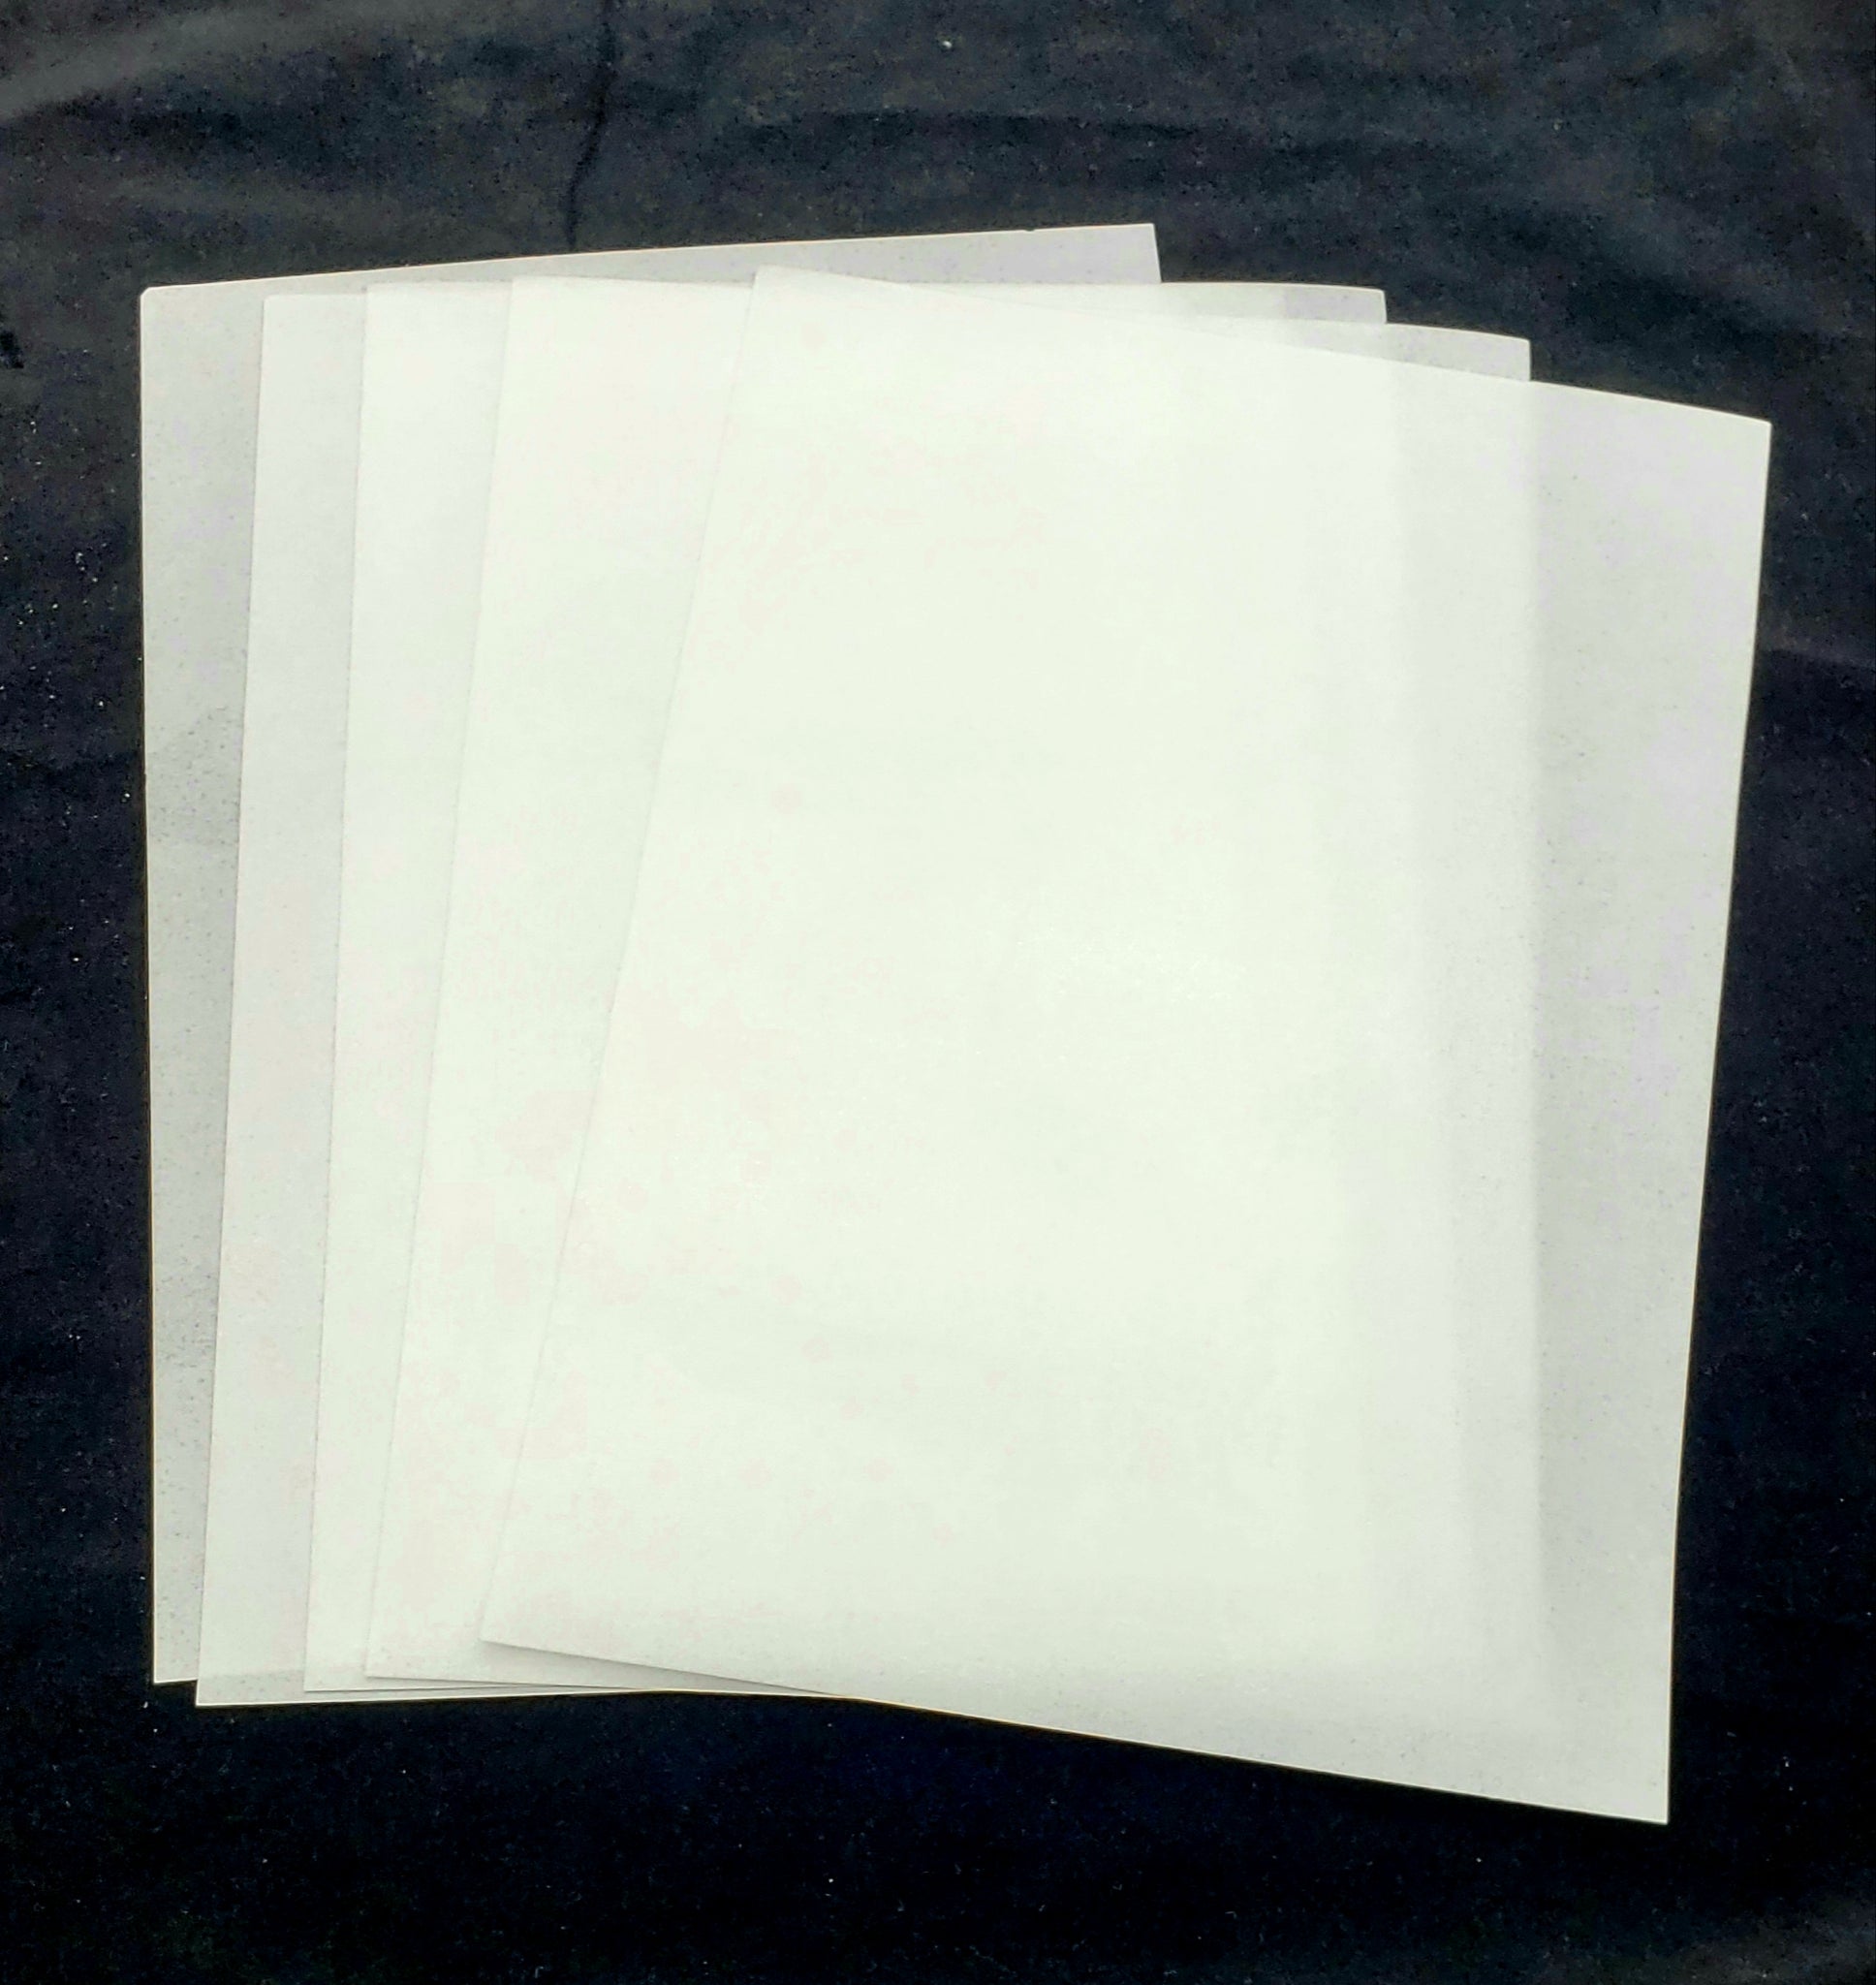 EdibleThingz 50 Sheet Edible Wafer Paper - White 8x11 for Cake